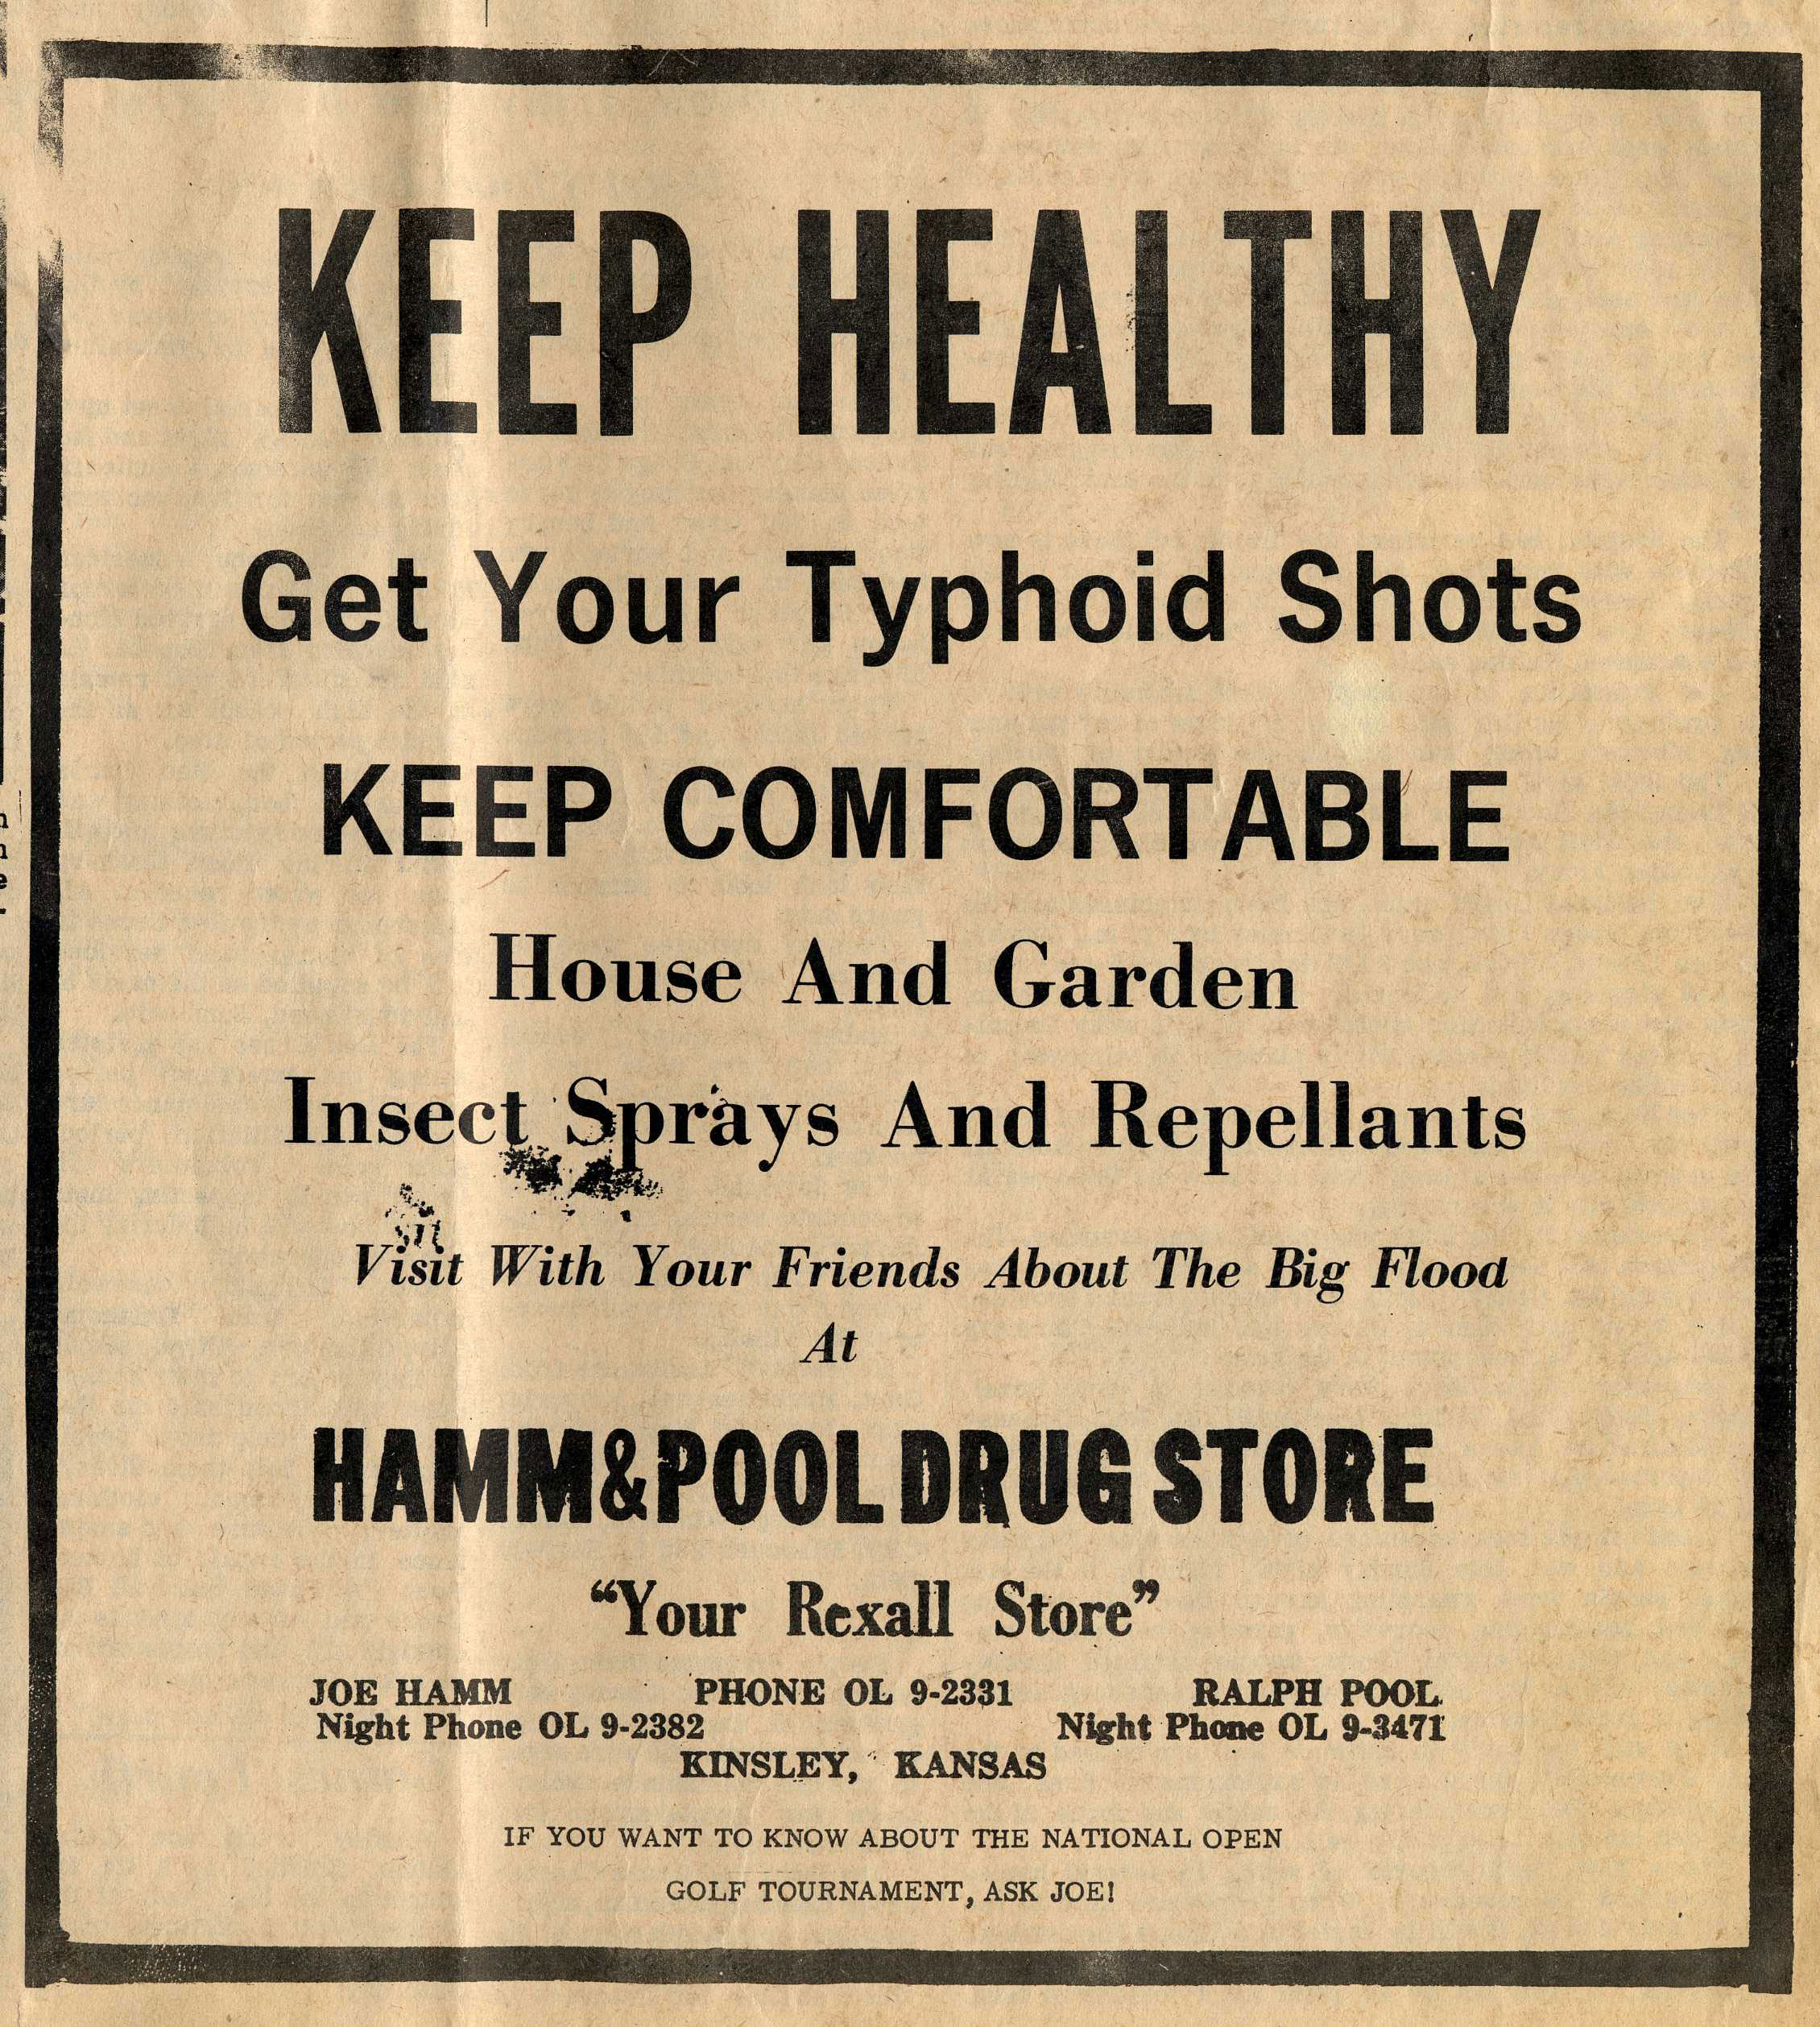 1965 Drug Store Ad encouraging Typhoid Shots